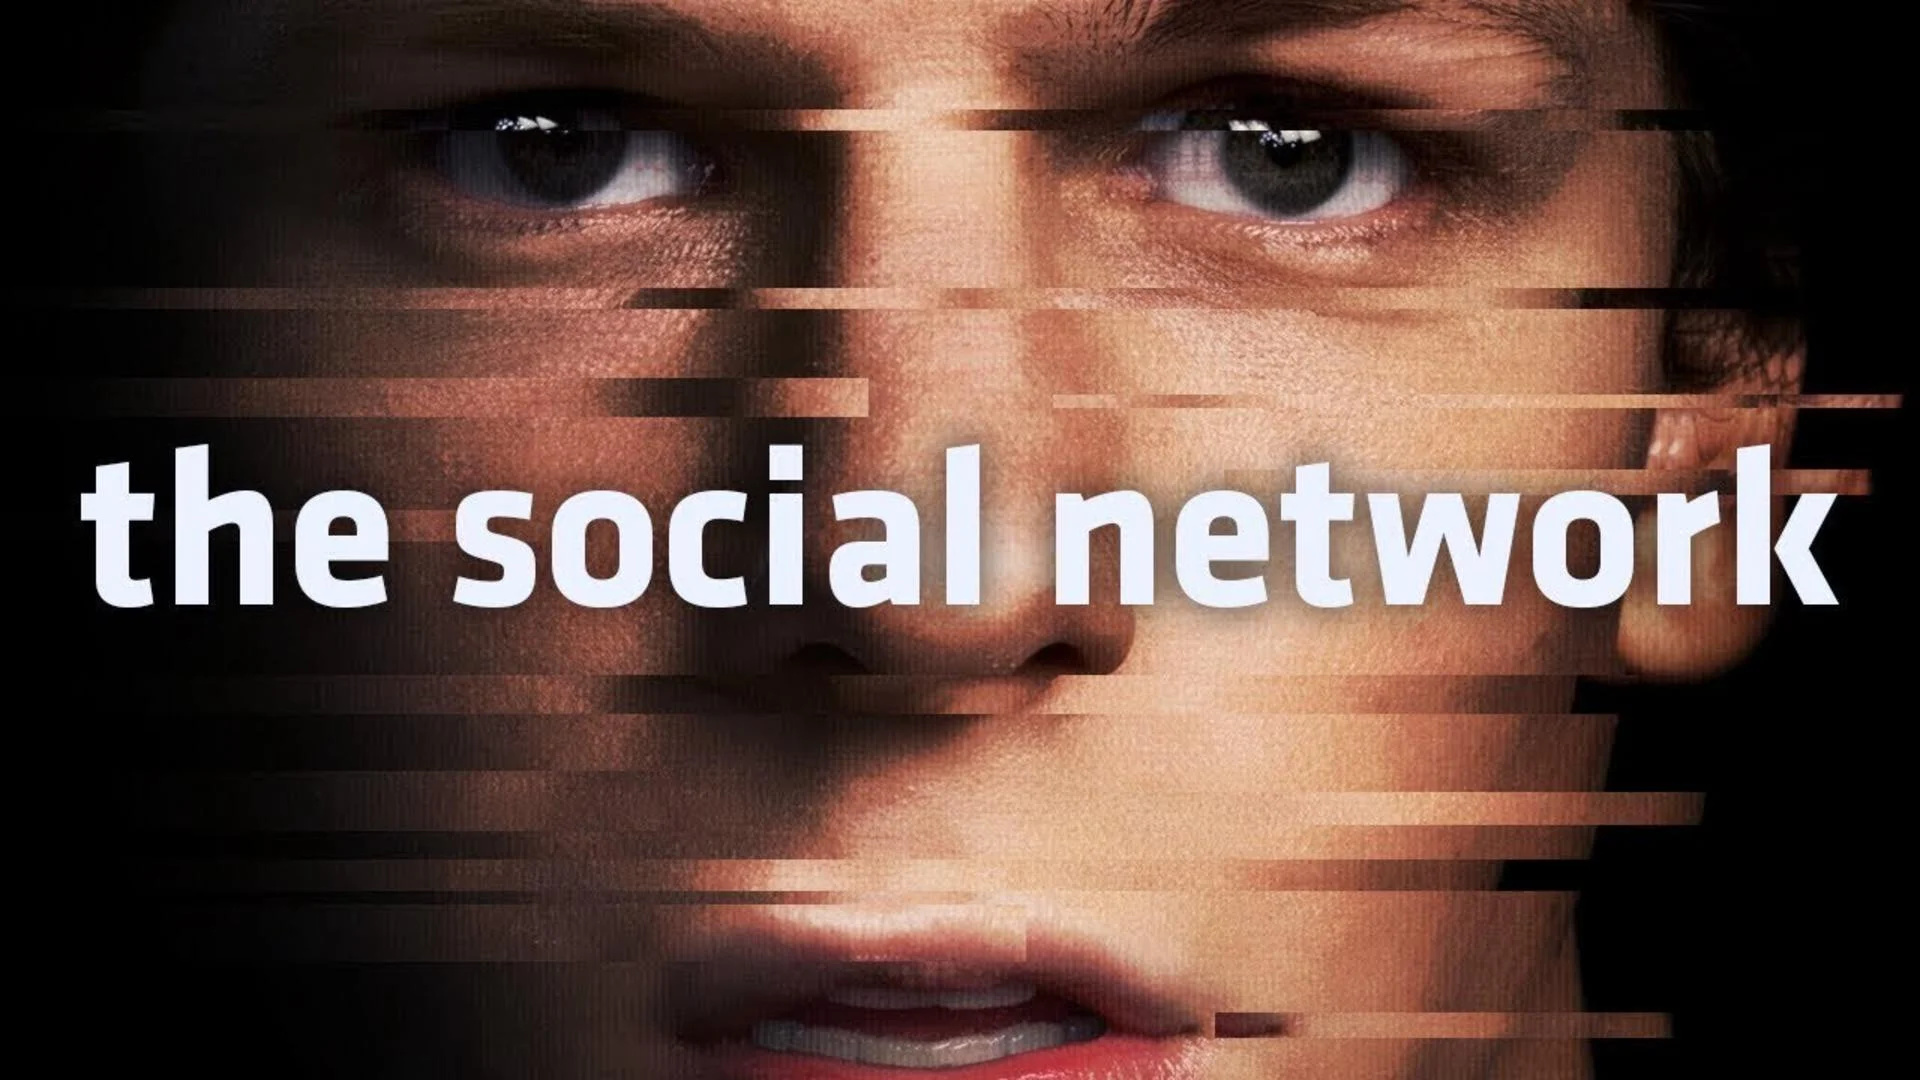 The Social Network 10th anniversary, Film festival screening, Post-screening discussion, Cultural impact, 1920x1080 Full HD Desktop